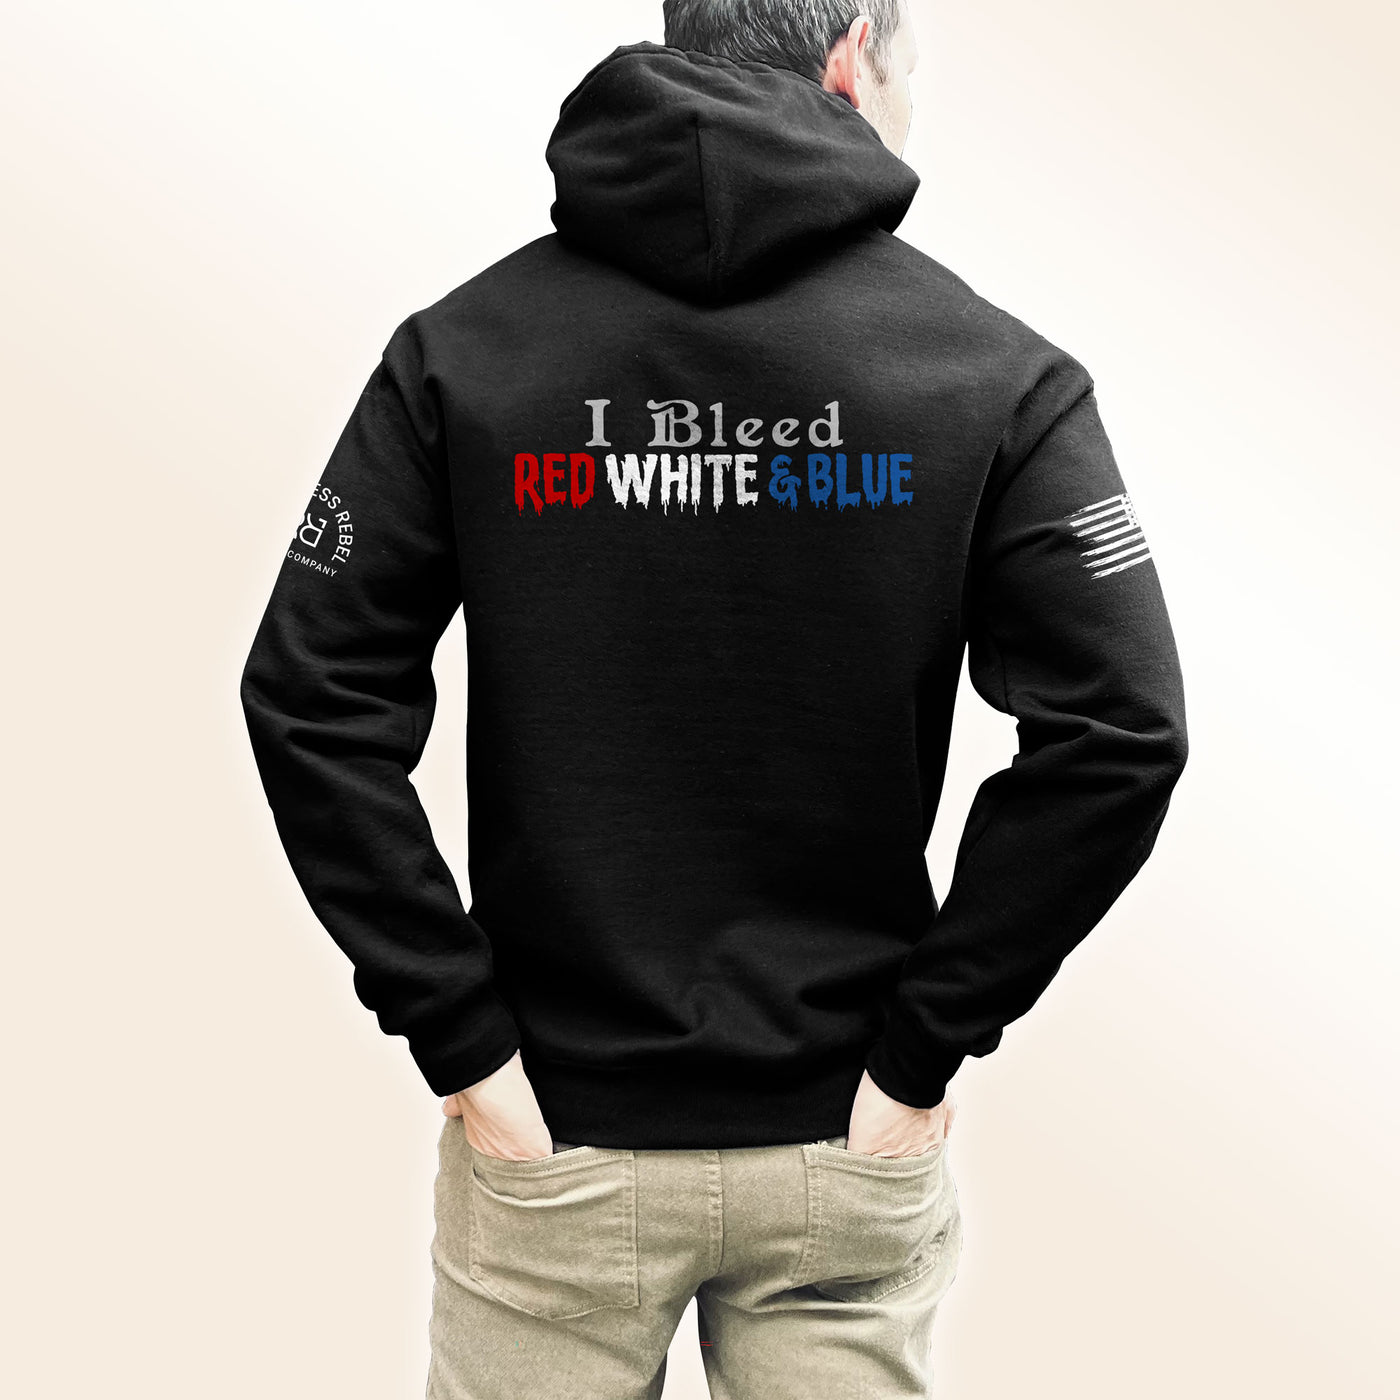 Man wearing Solid Black Men's I Bleed Red White & Blue Back Design Hoodie